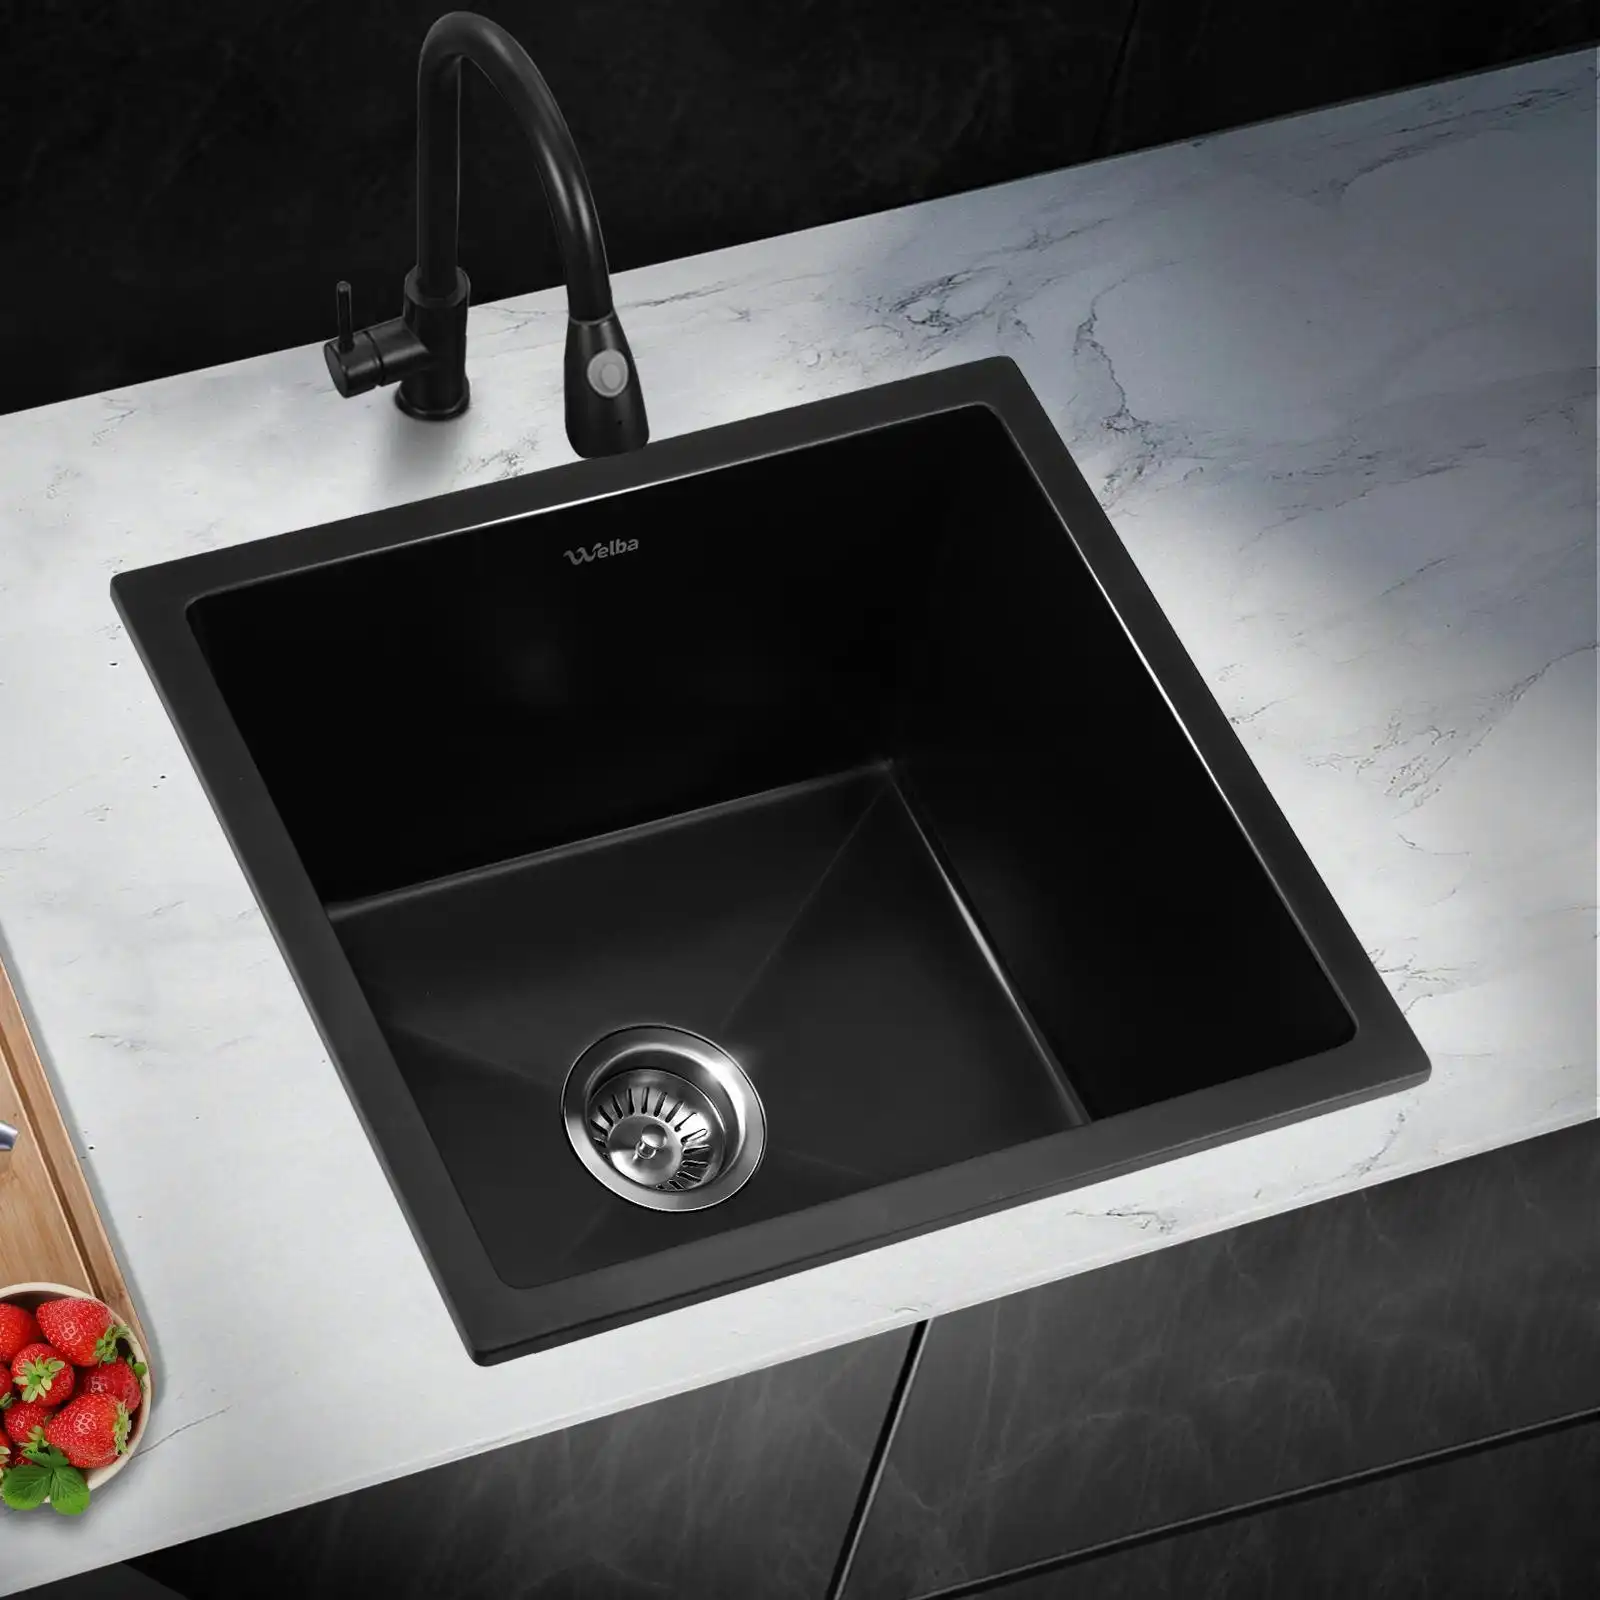 Welba Kitchen Sink 38x38cm Granite Stone Sink Laundry Basin Single Bowl Black